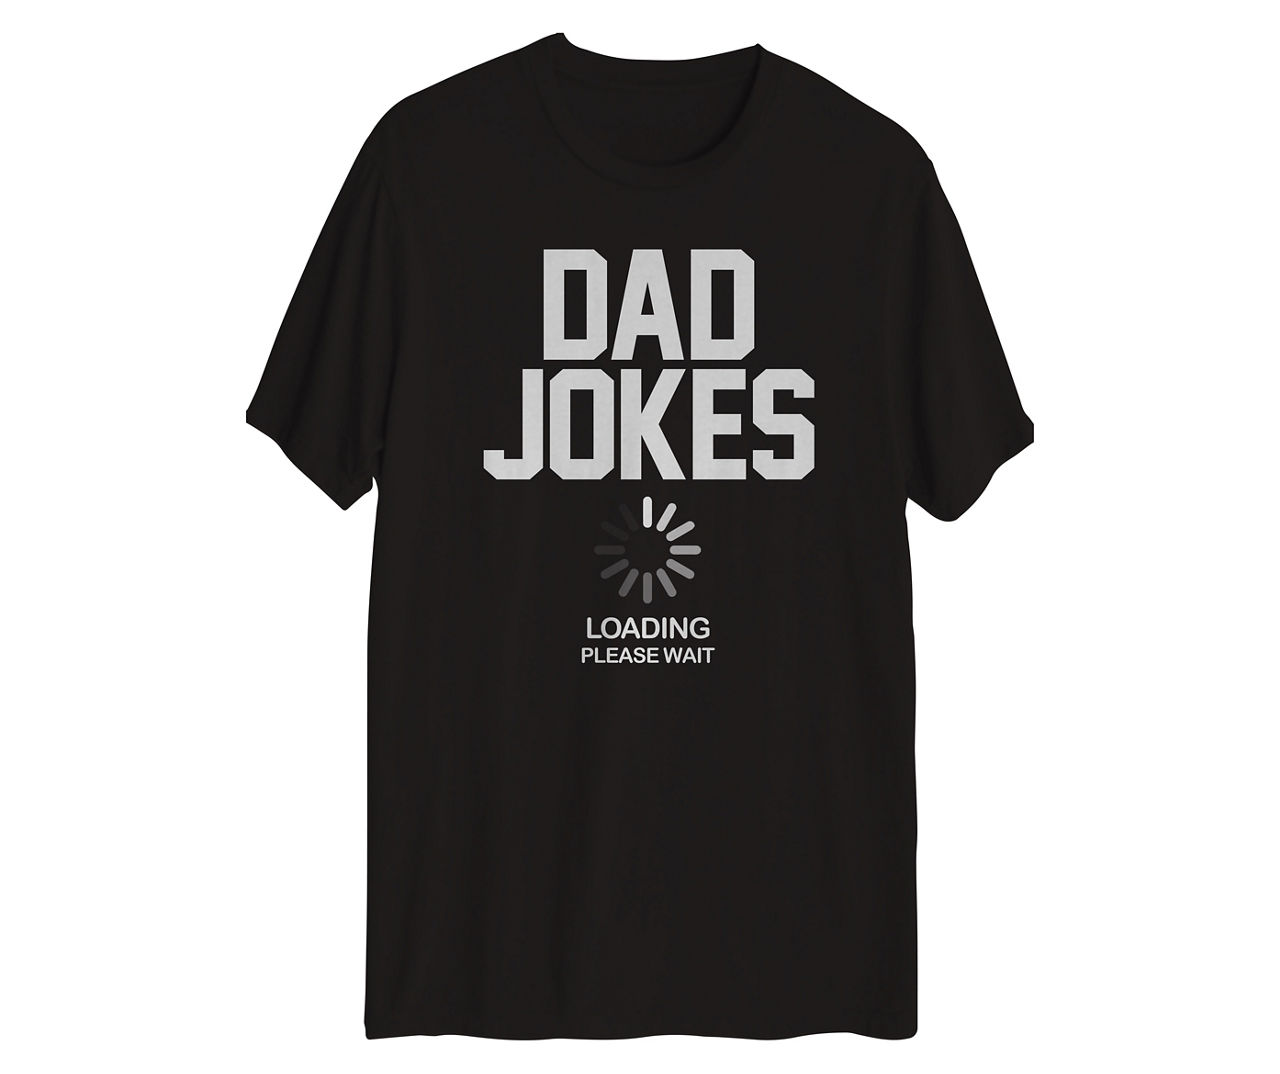 Men's Size XX-Large "Dad Jokes" Black Graphic Tee